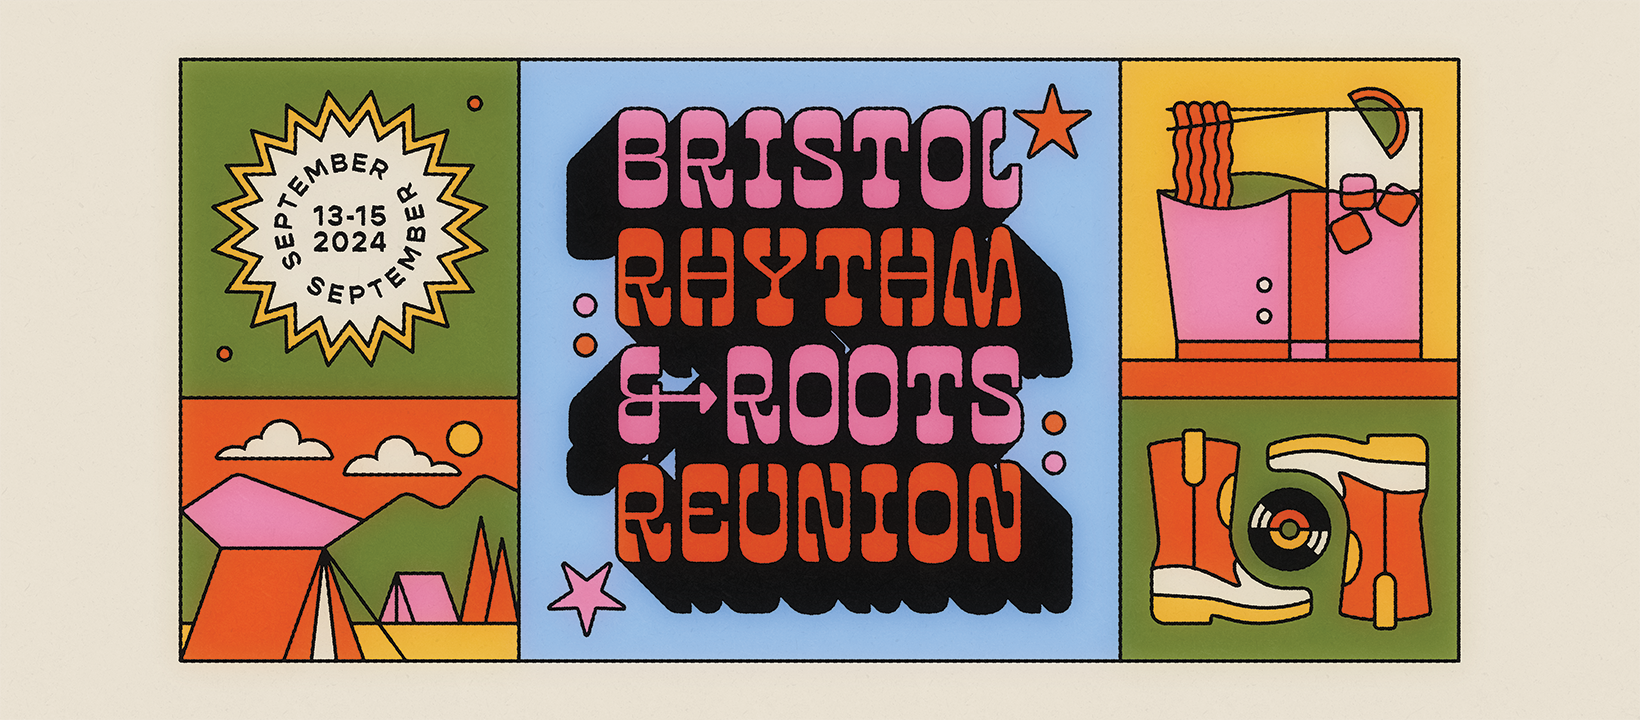 Bristol Rhythm & Roots Reunion graphic